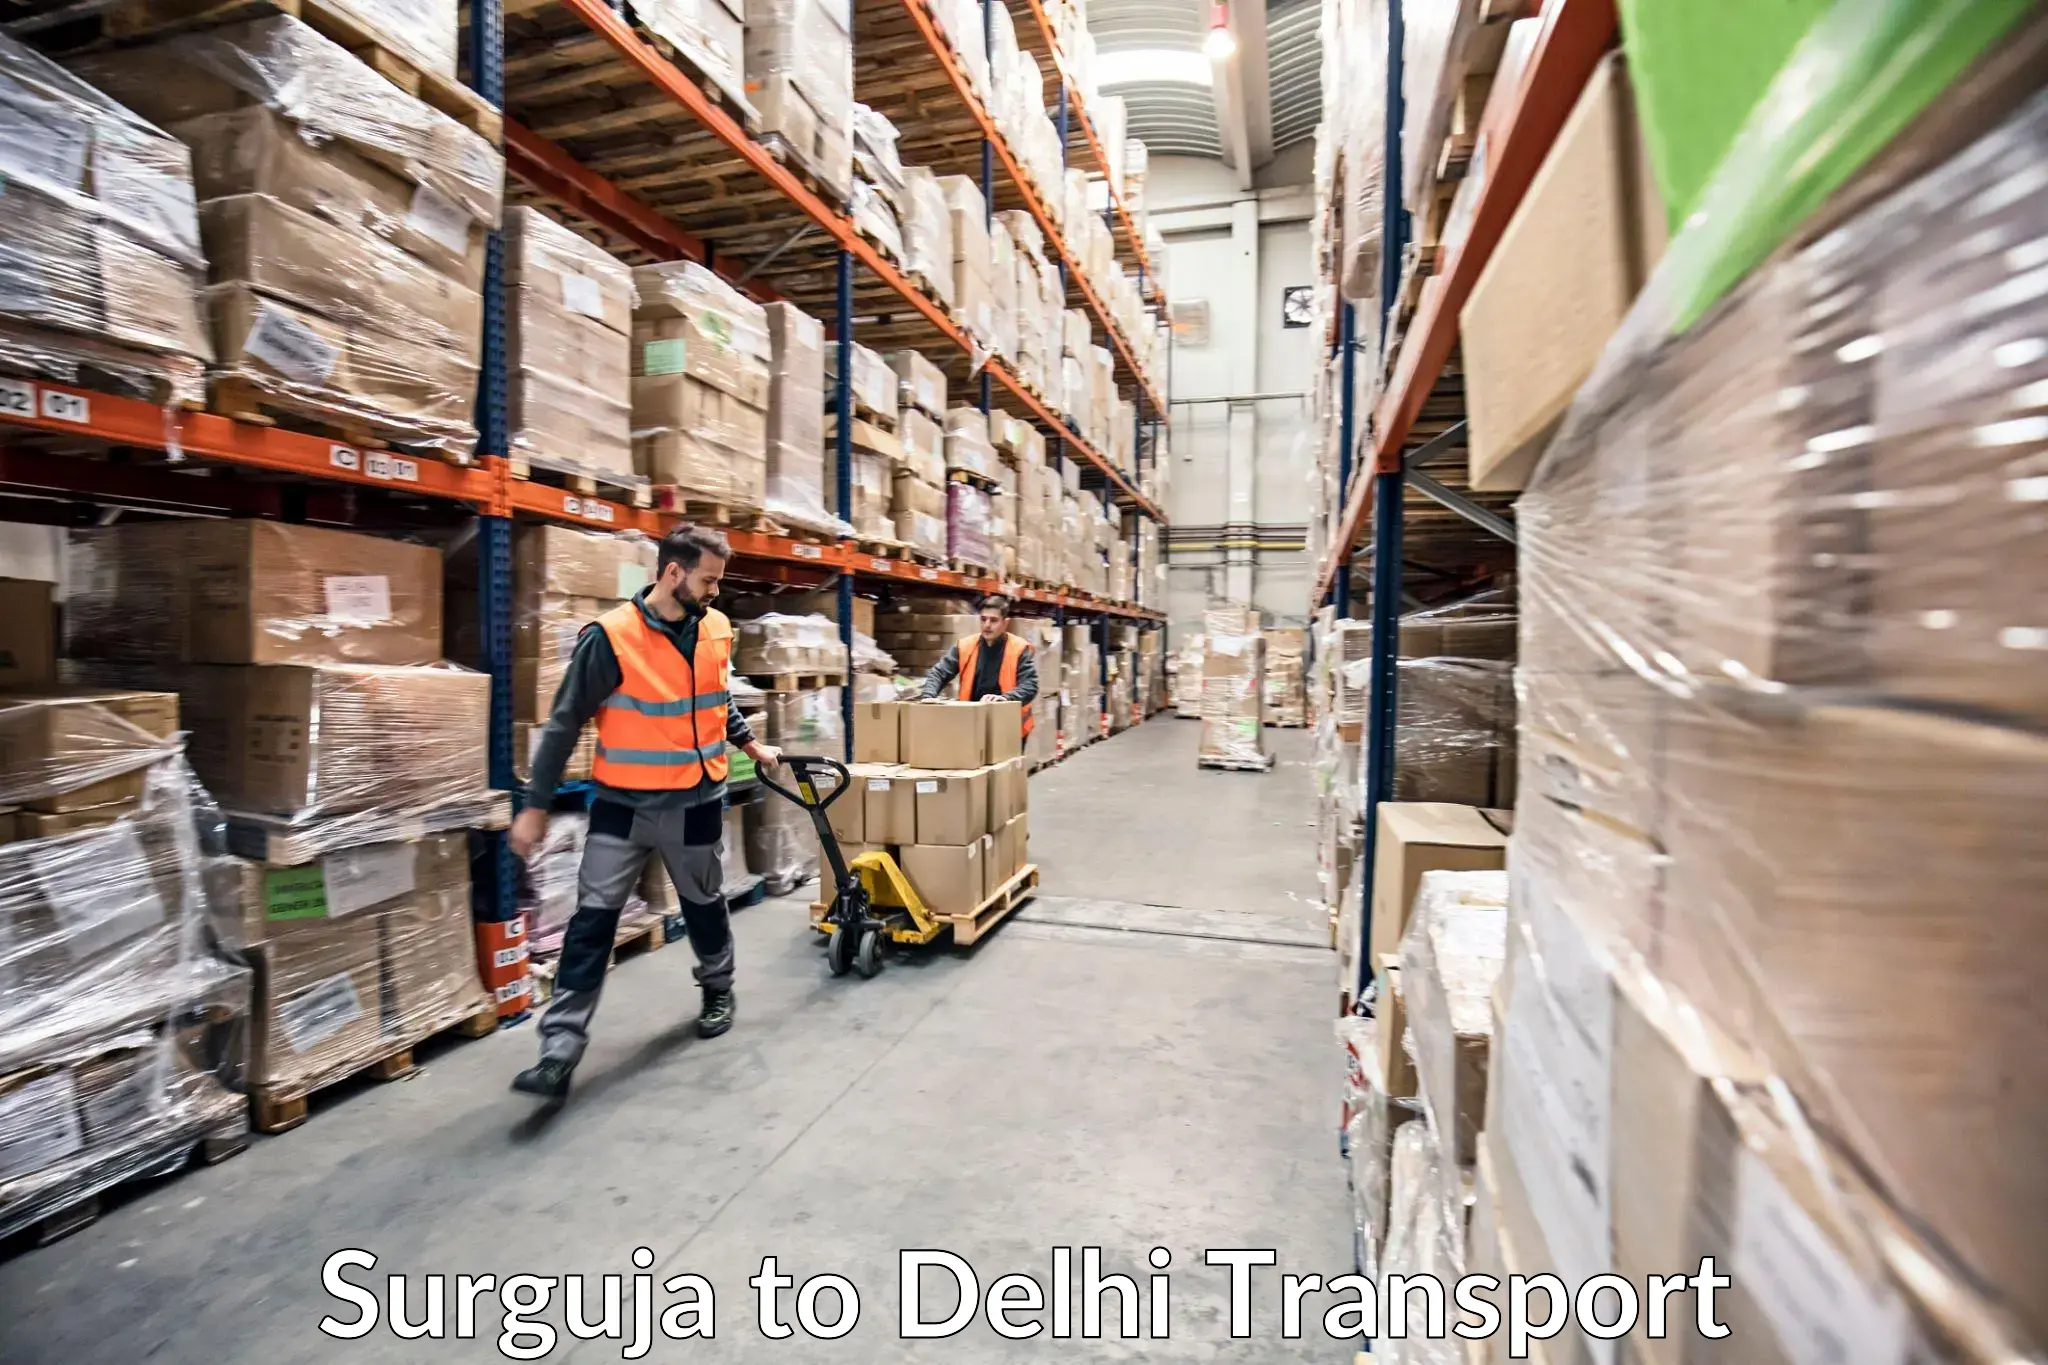 Goods delivery service Surguja to Delhi